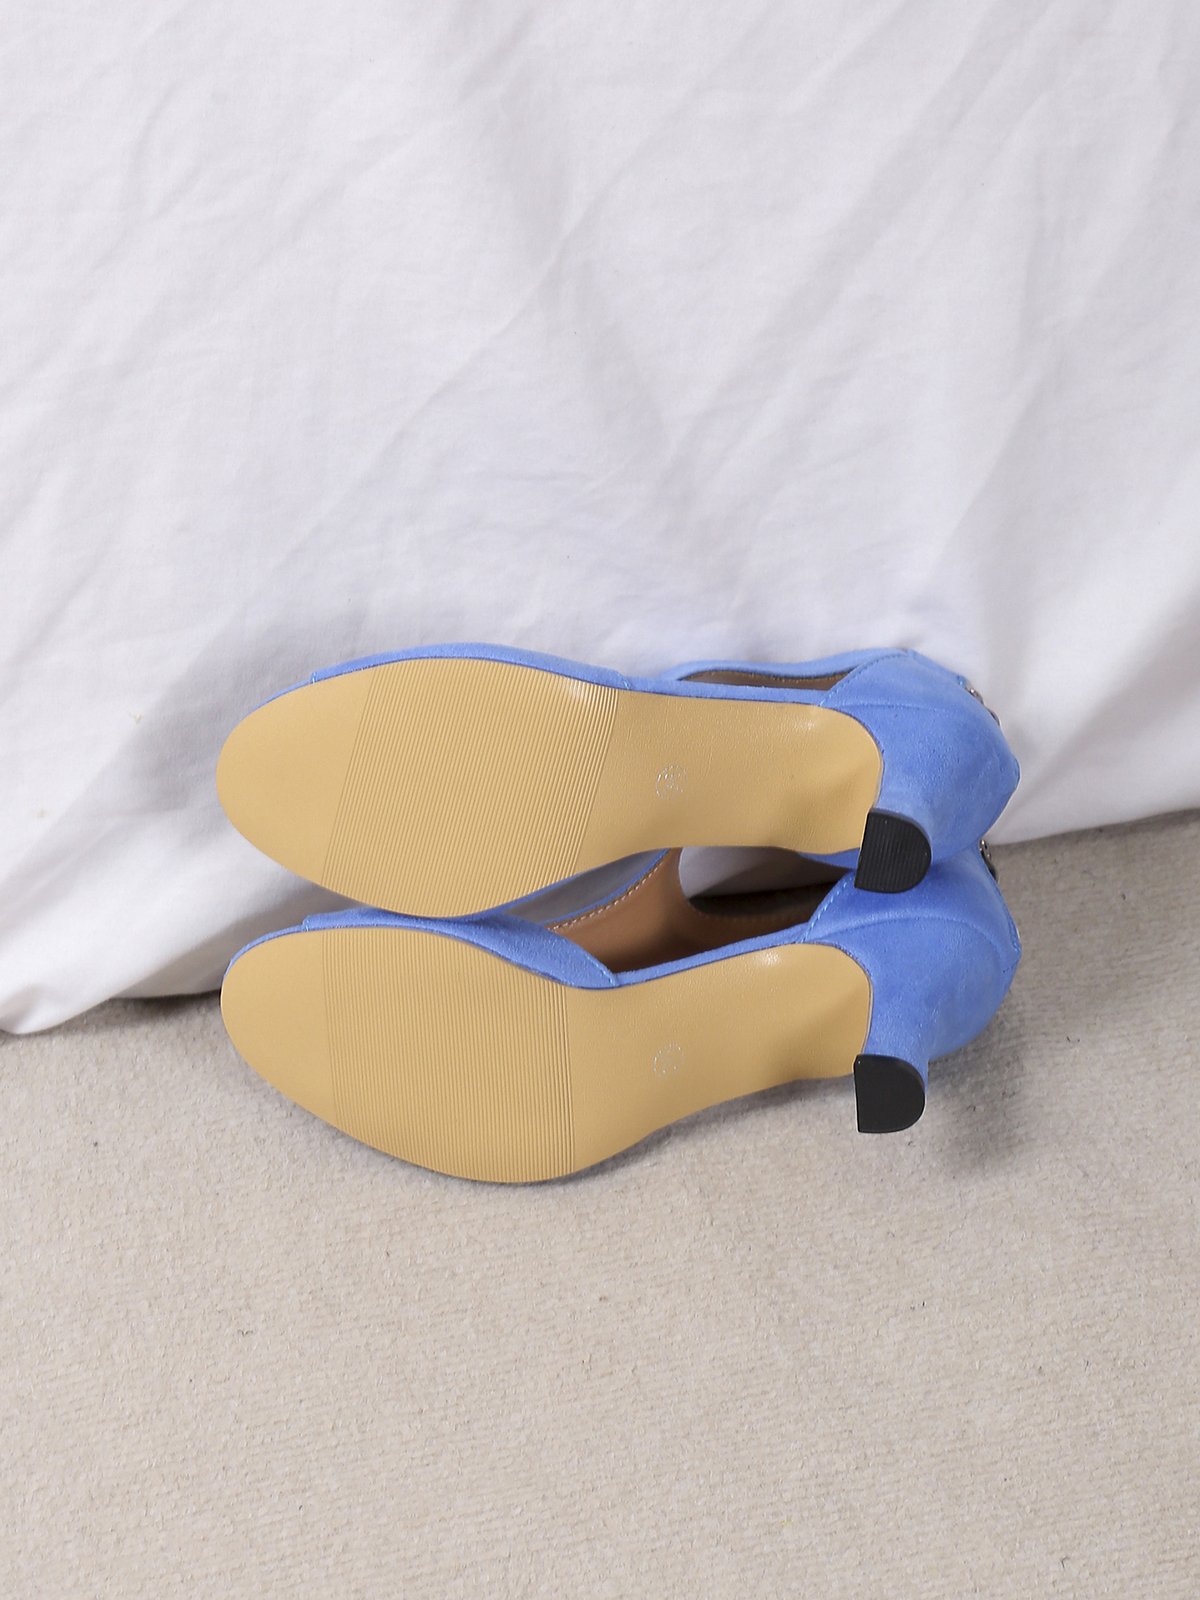 Black Suede Cutout Strap Peep Toe Mid Heel Sandals